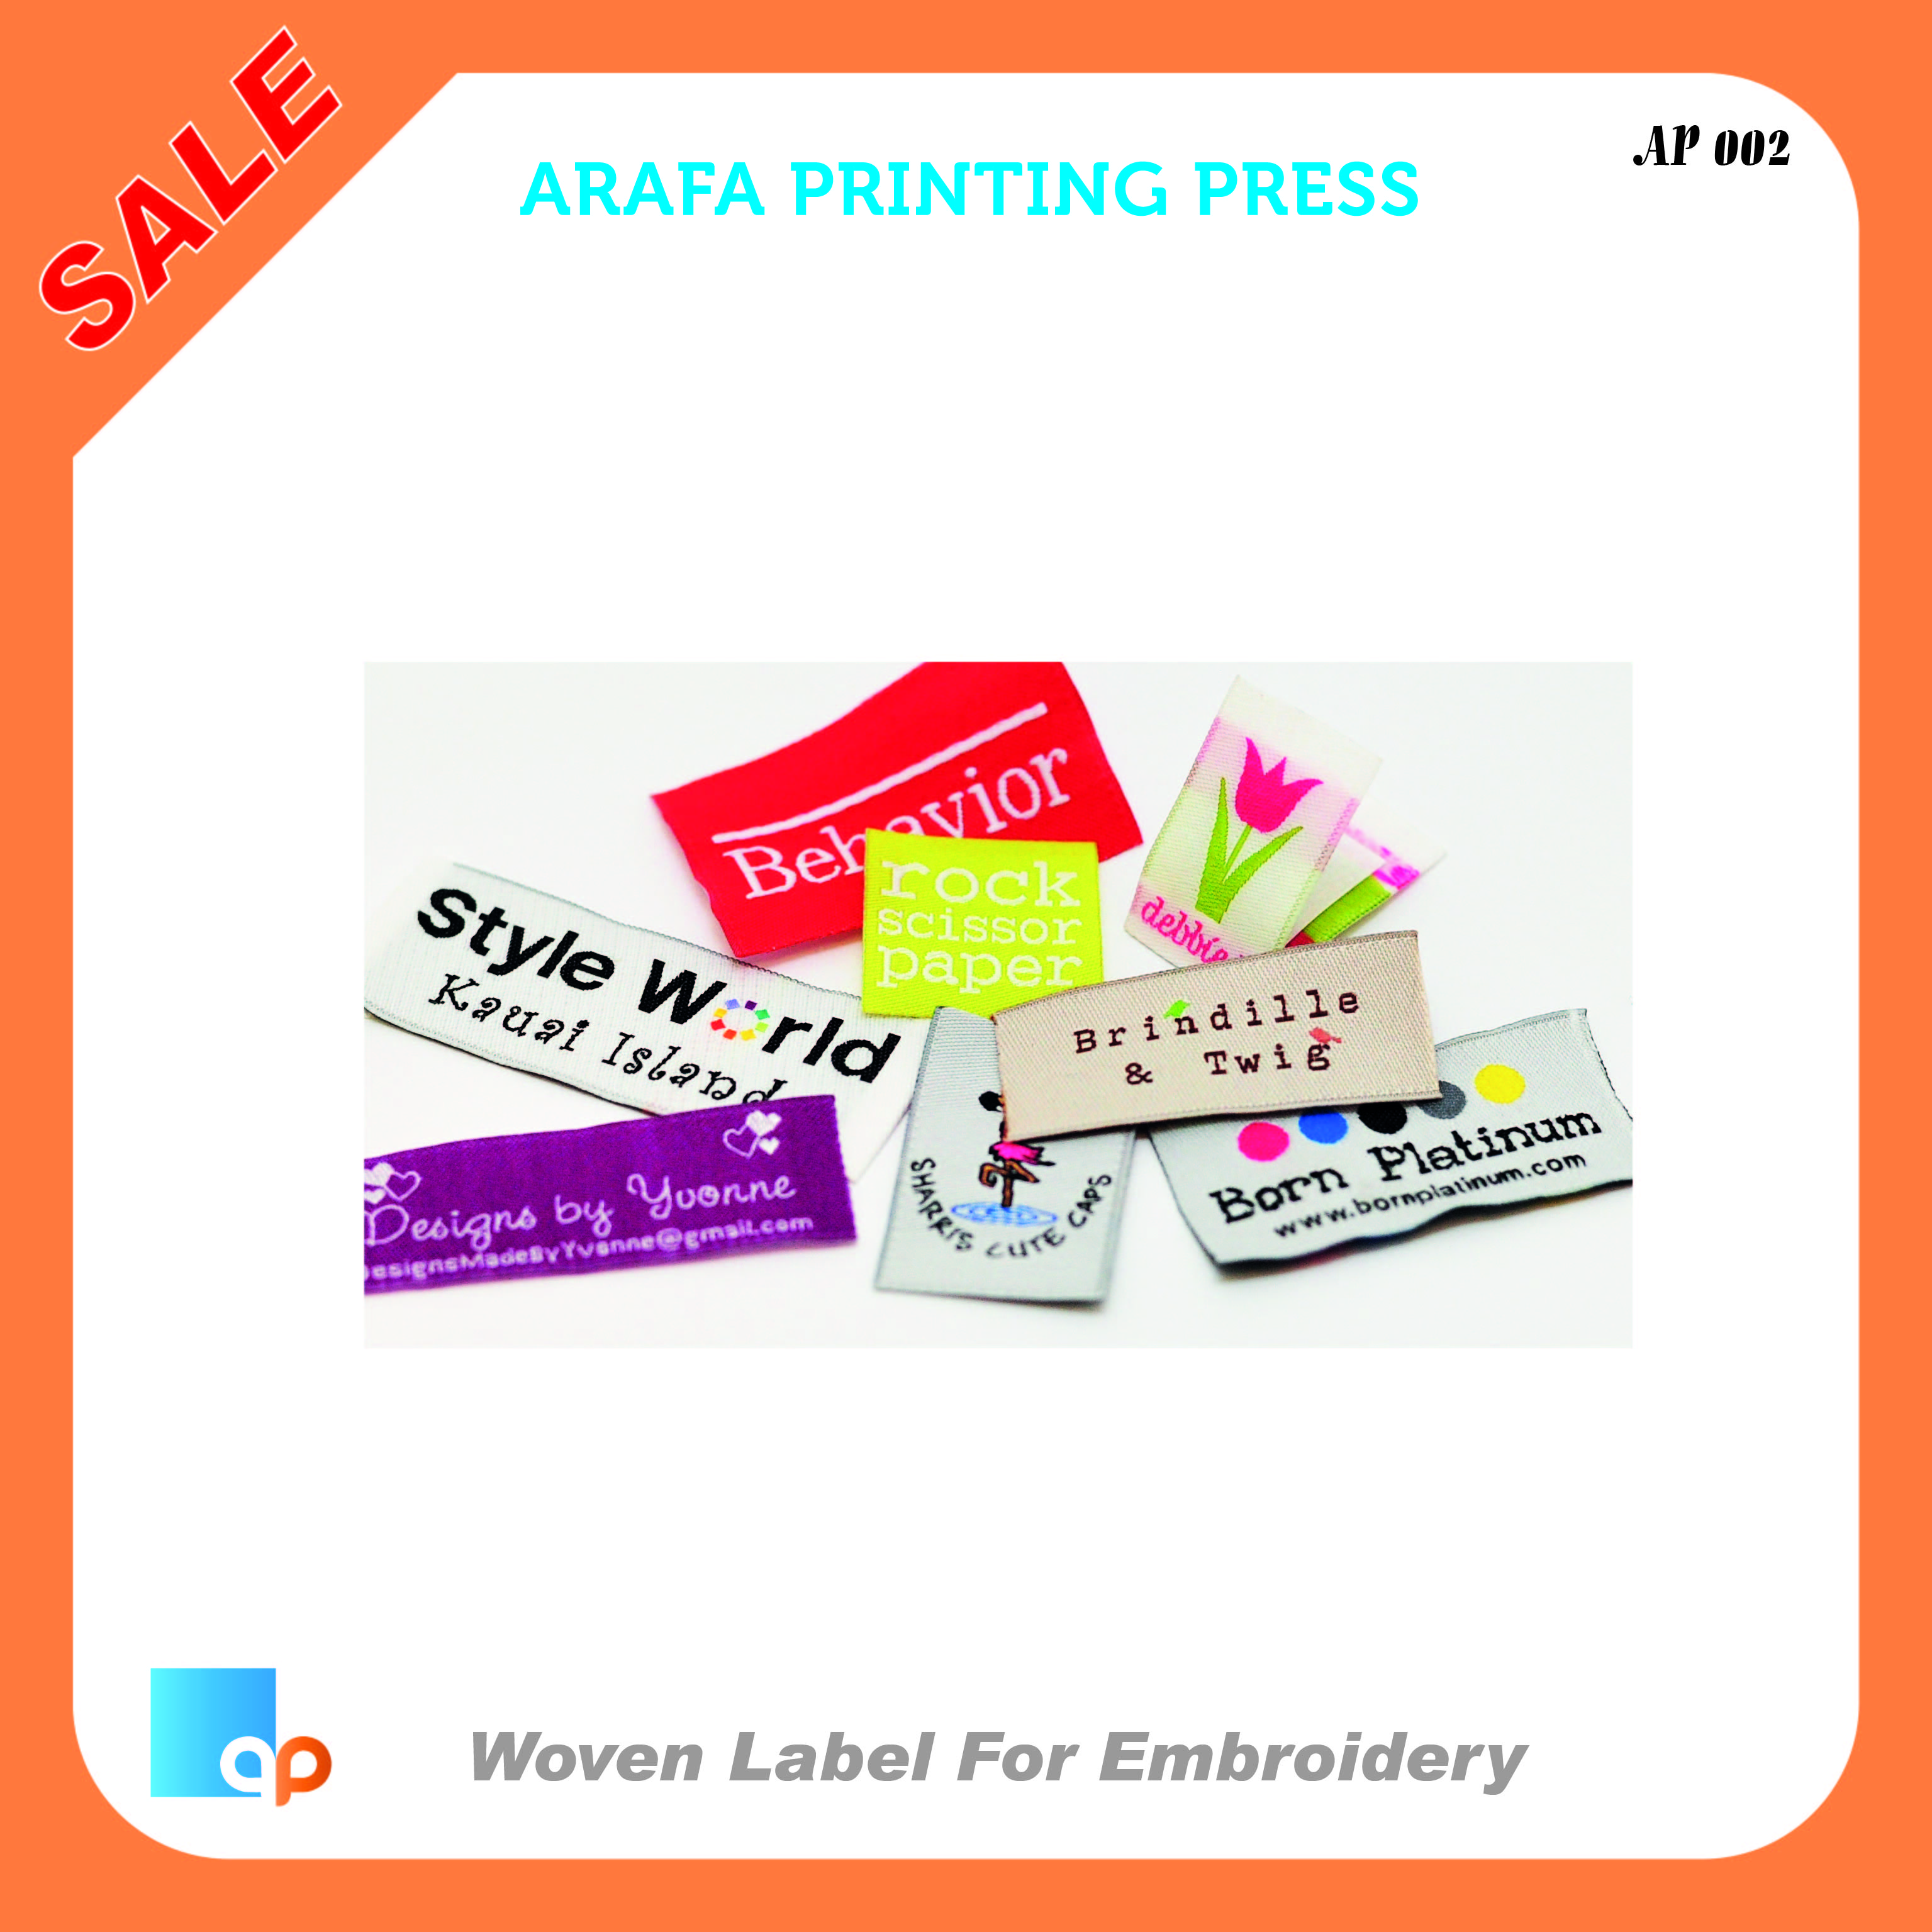 Woven label printing in Dubai